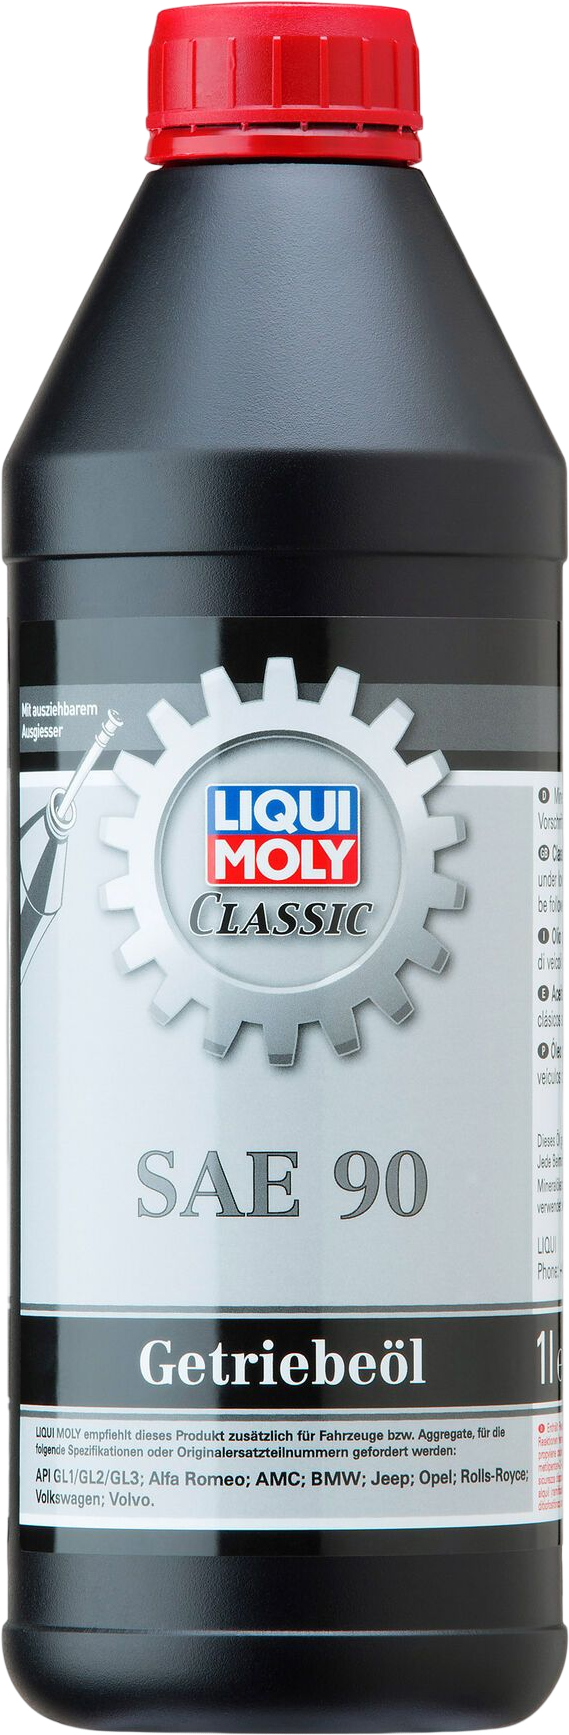 Liqui Moly Classic Transmissieolie SAE 90, 6 x 1 lt detail 2